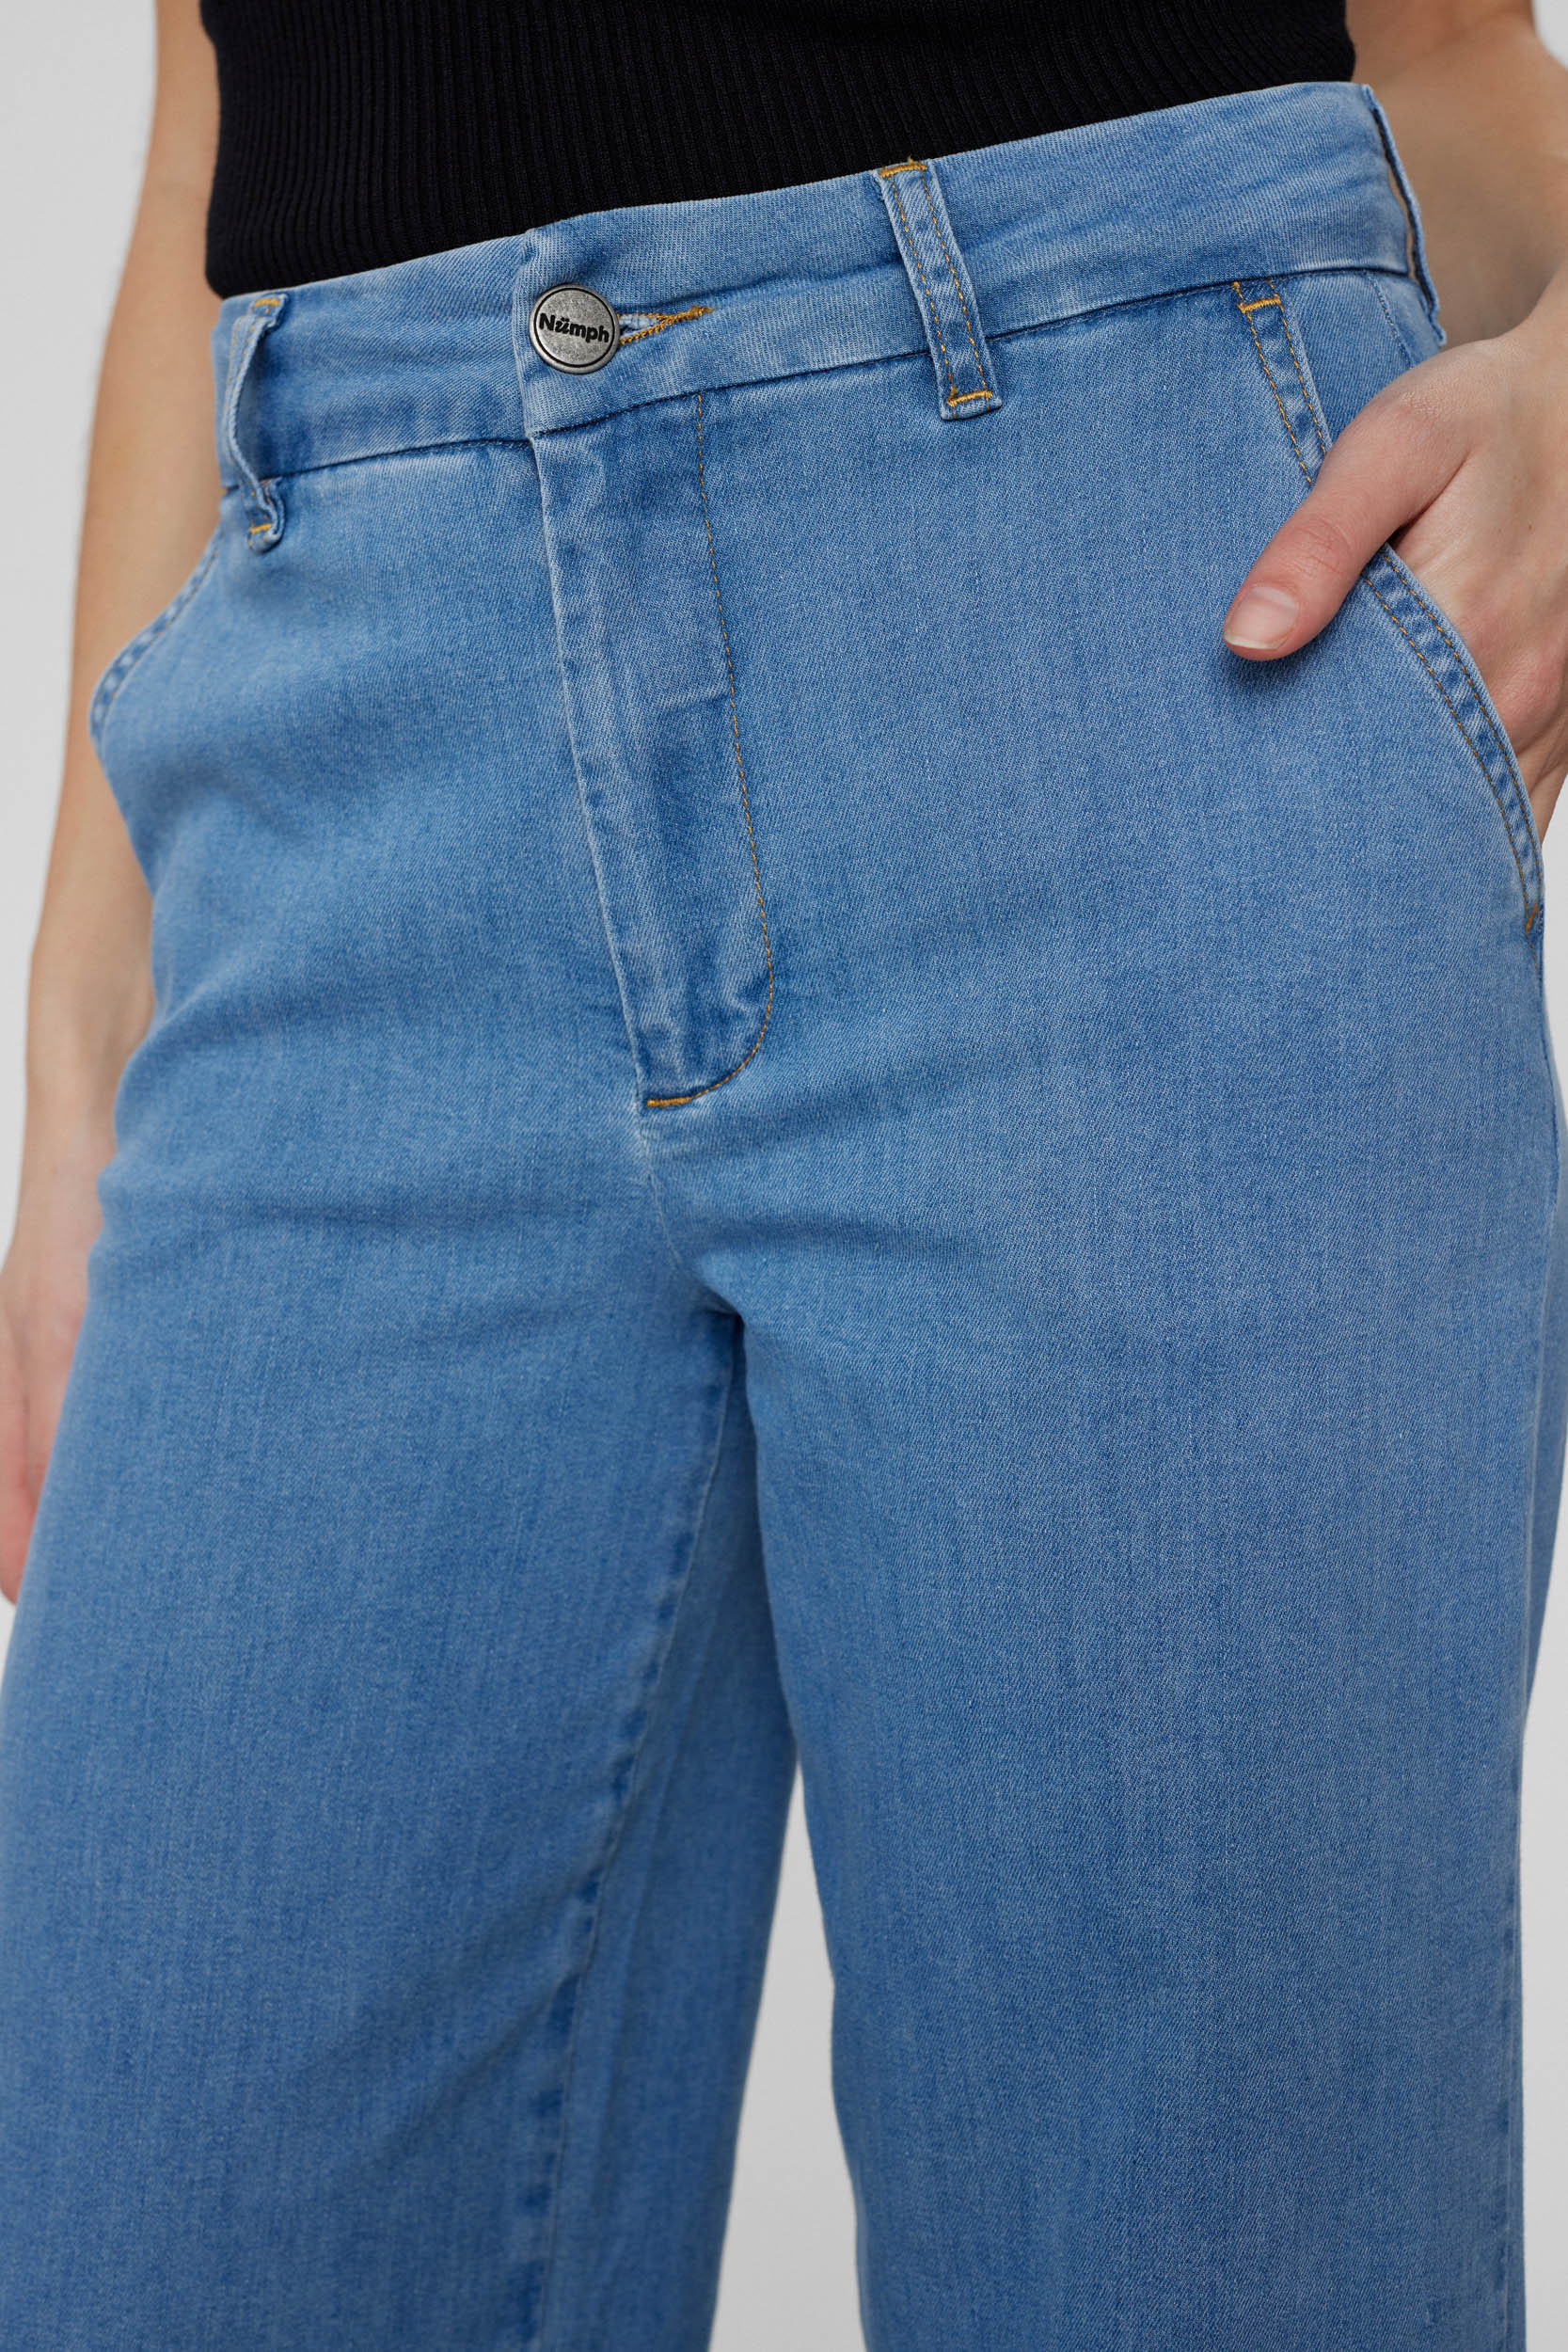 Nümph Nuamber Jeans in Light Denim Wash